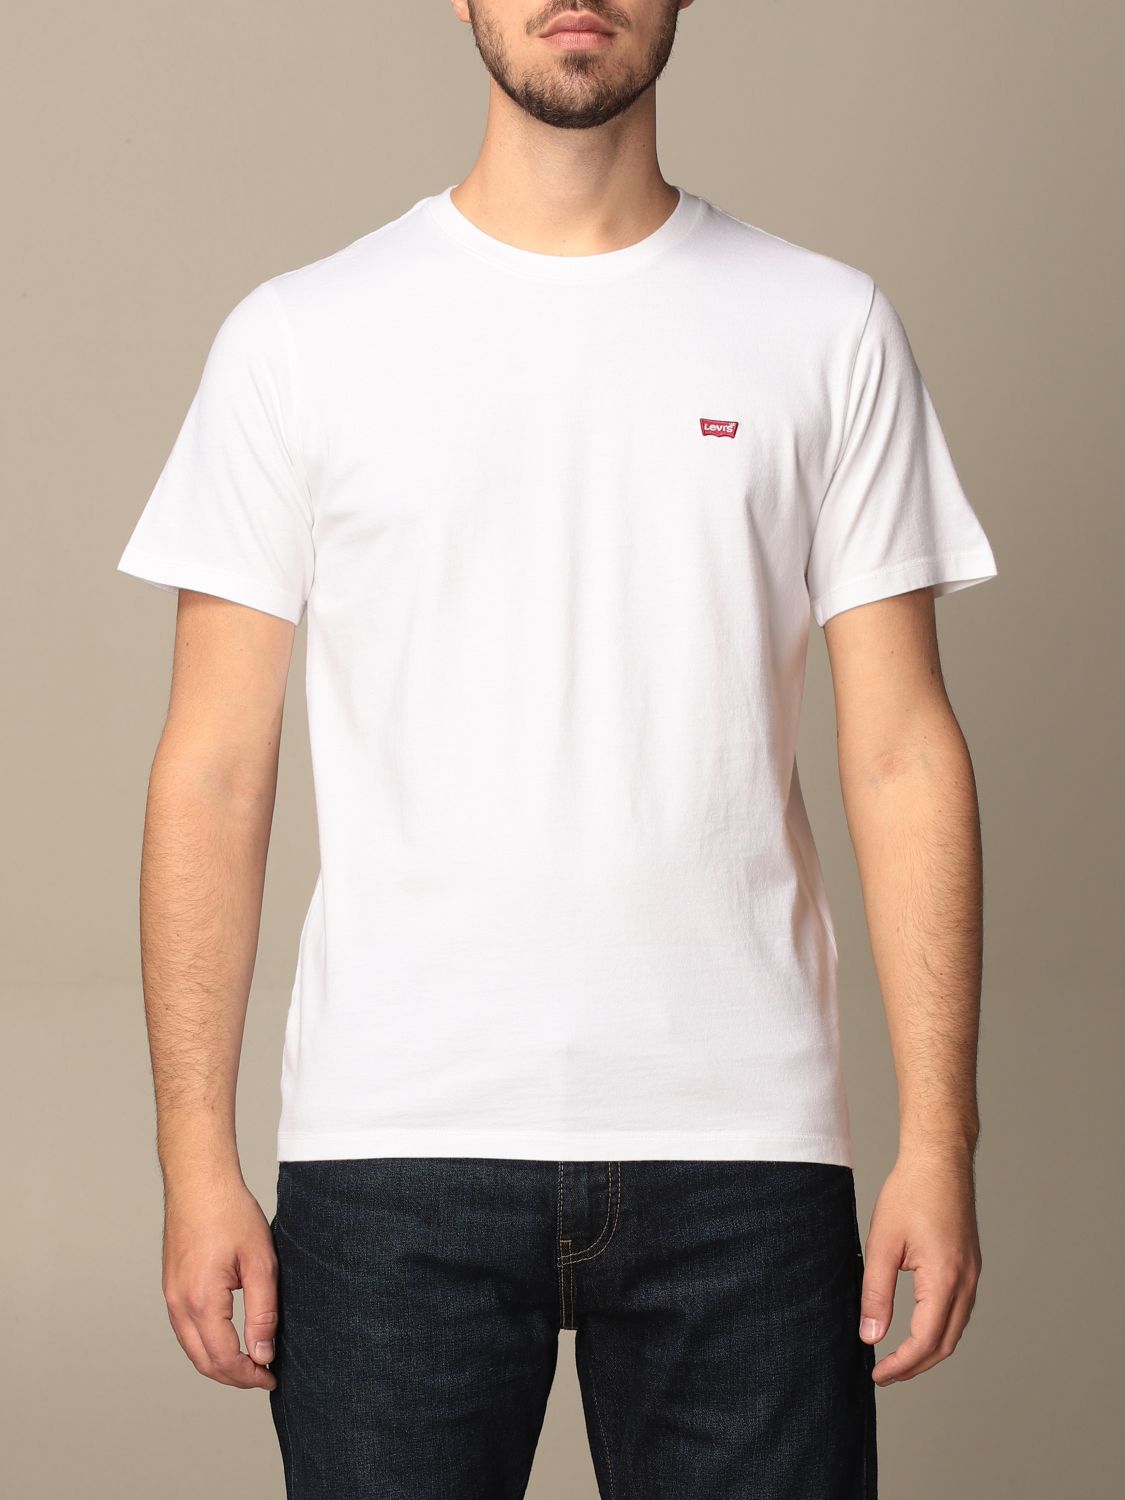 Levi's Outlet: cotton t-shirt with logo - White | Levi's t-shirt 56605 ...